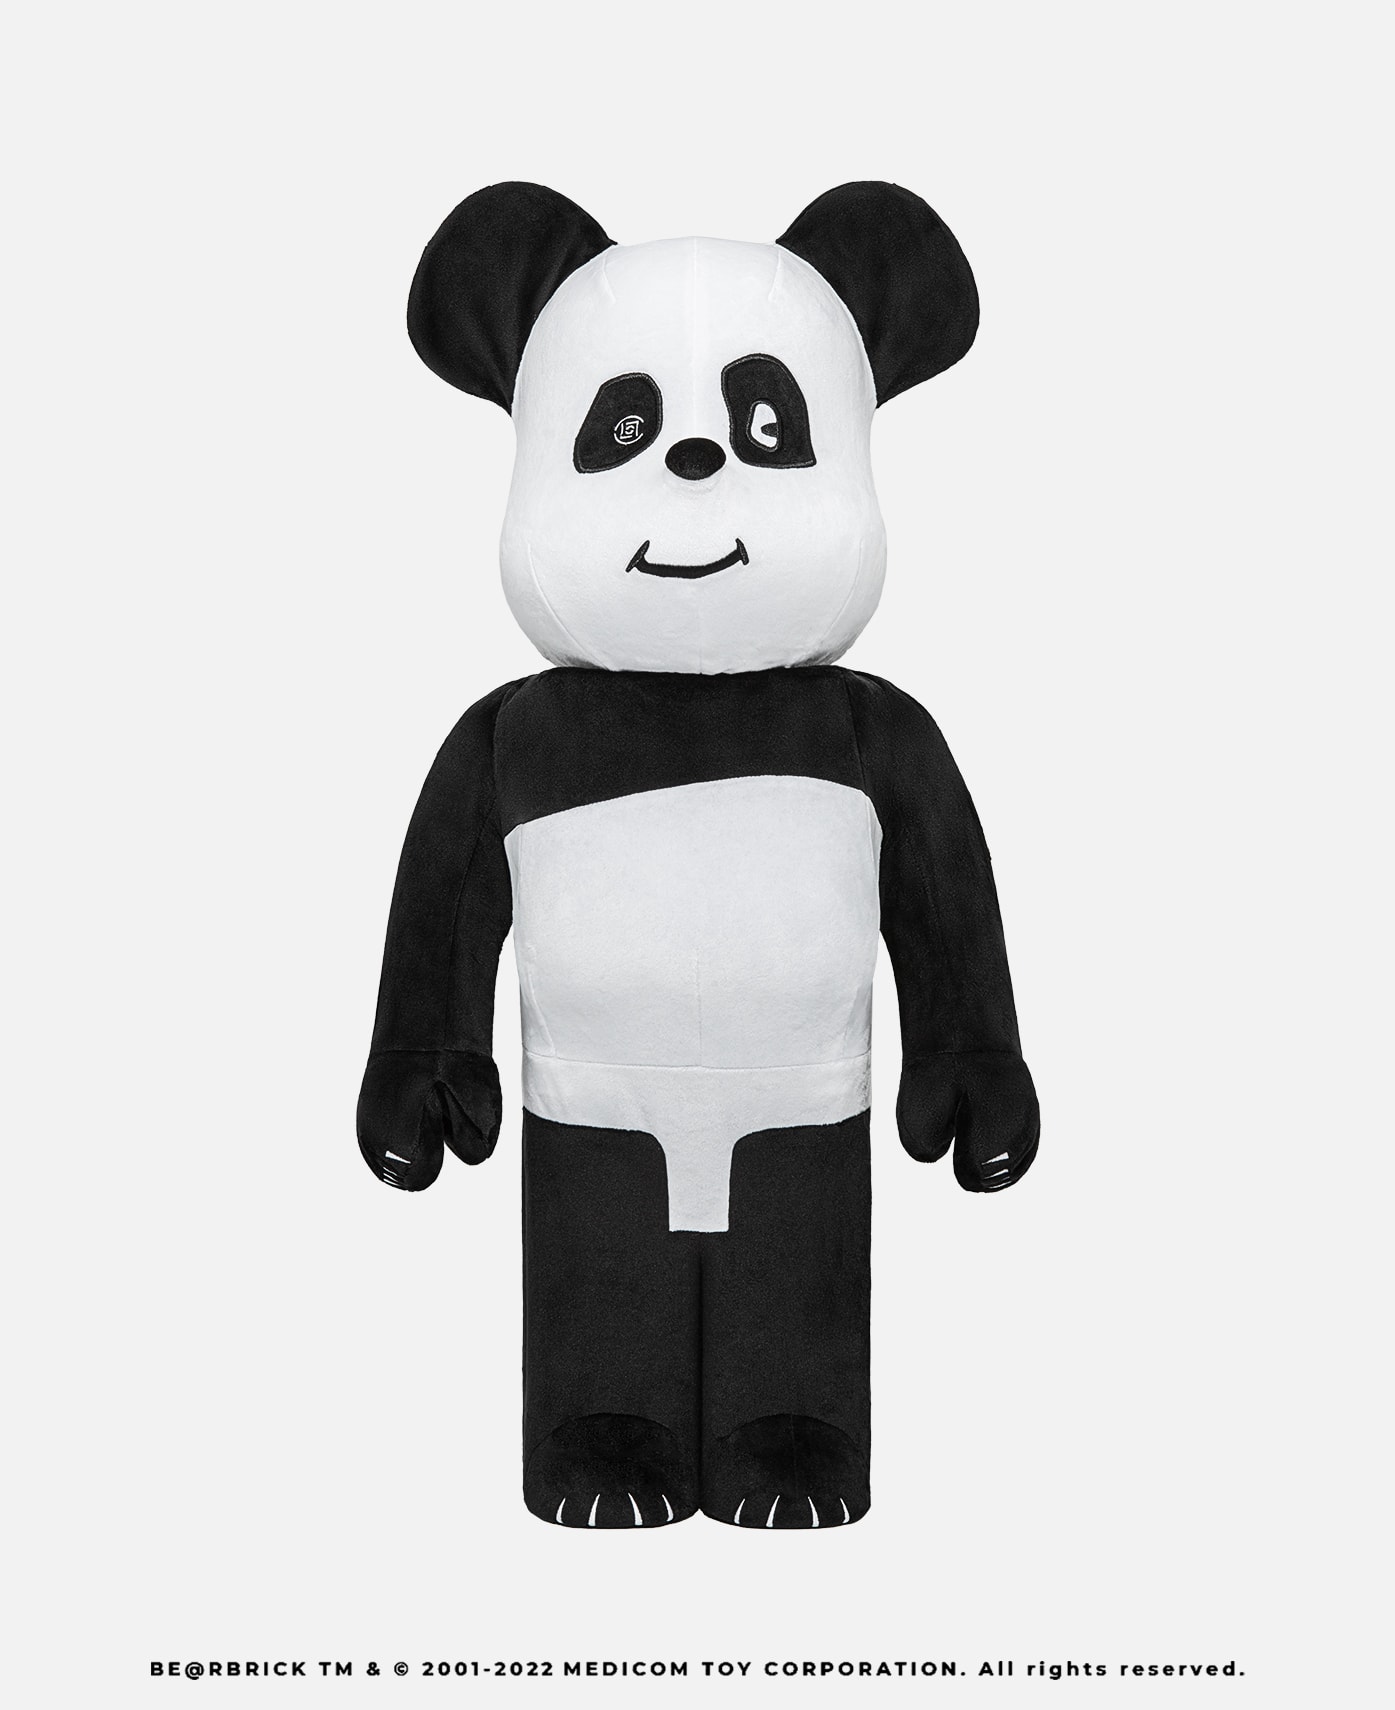 CLOT 携手 MEDICOM TOY 打造全新 BE@RBRICK PANDA 大熊猫